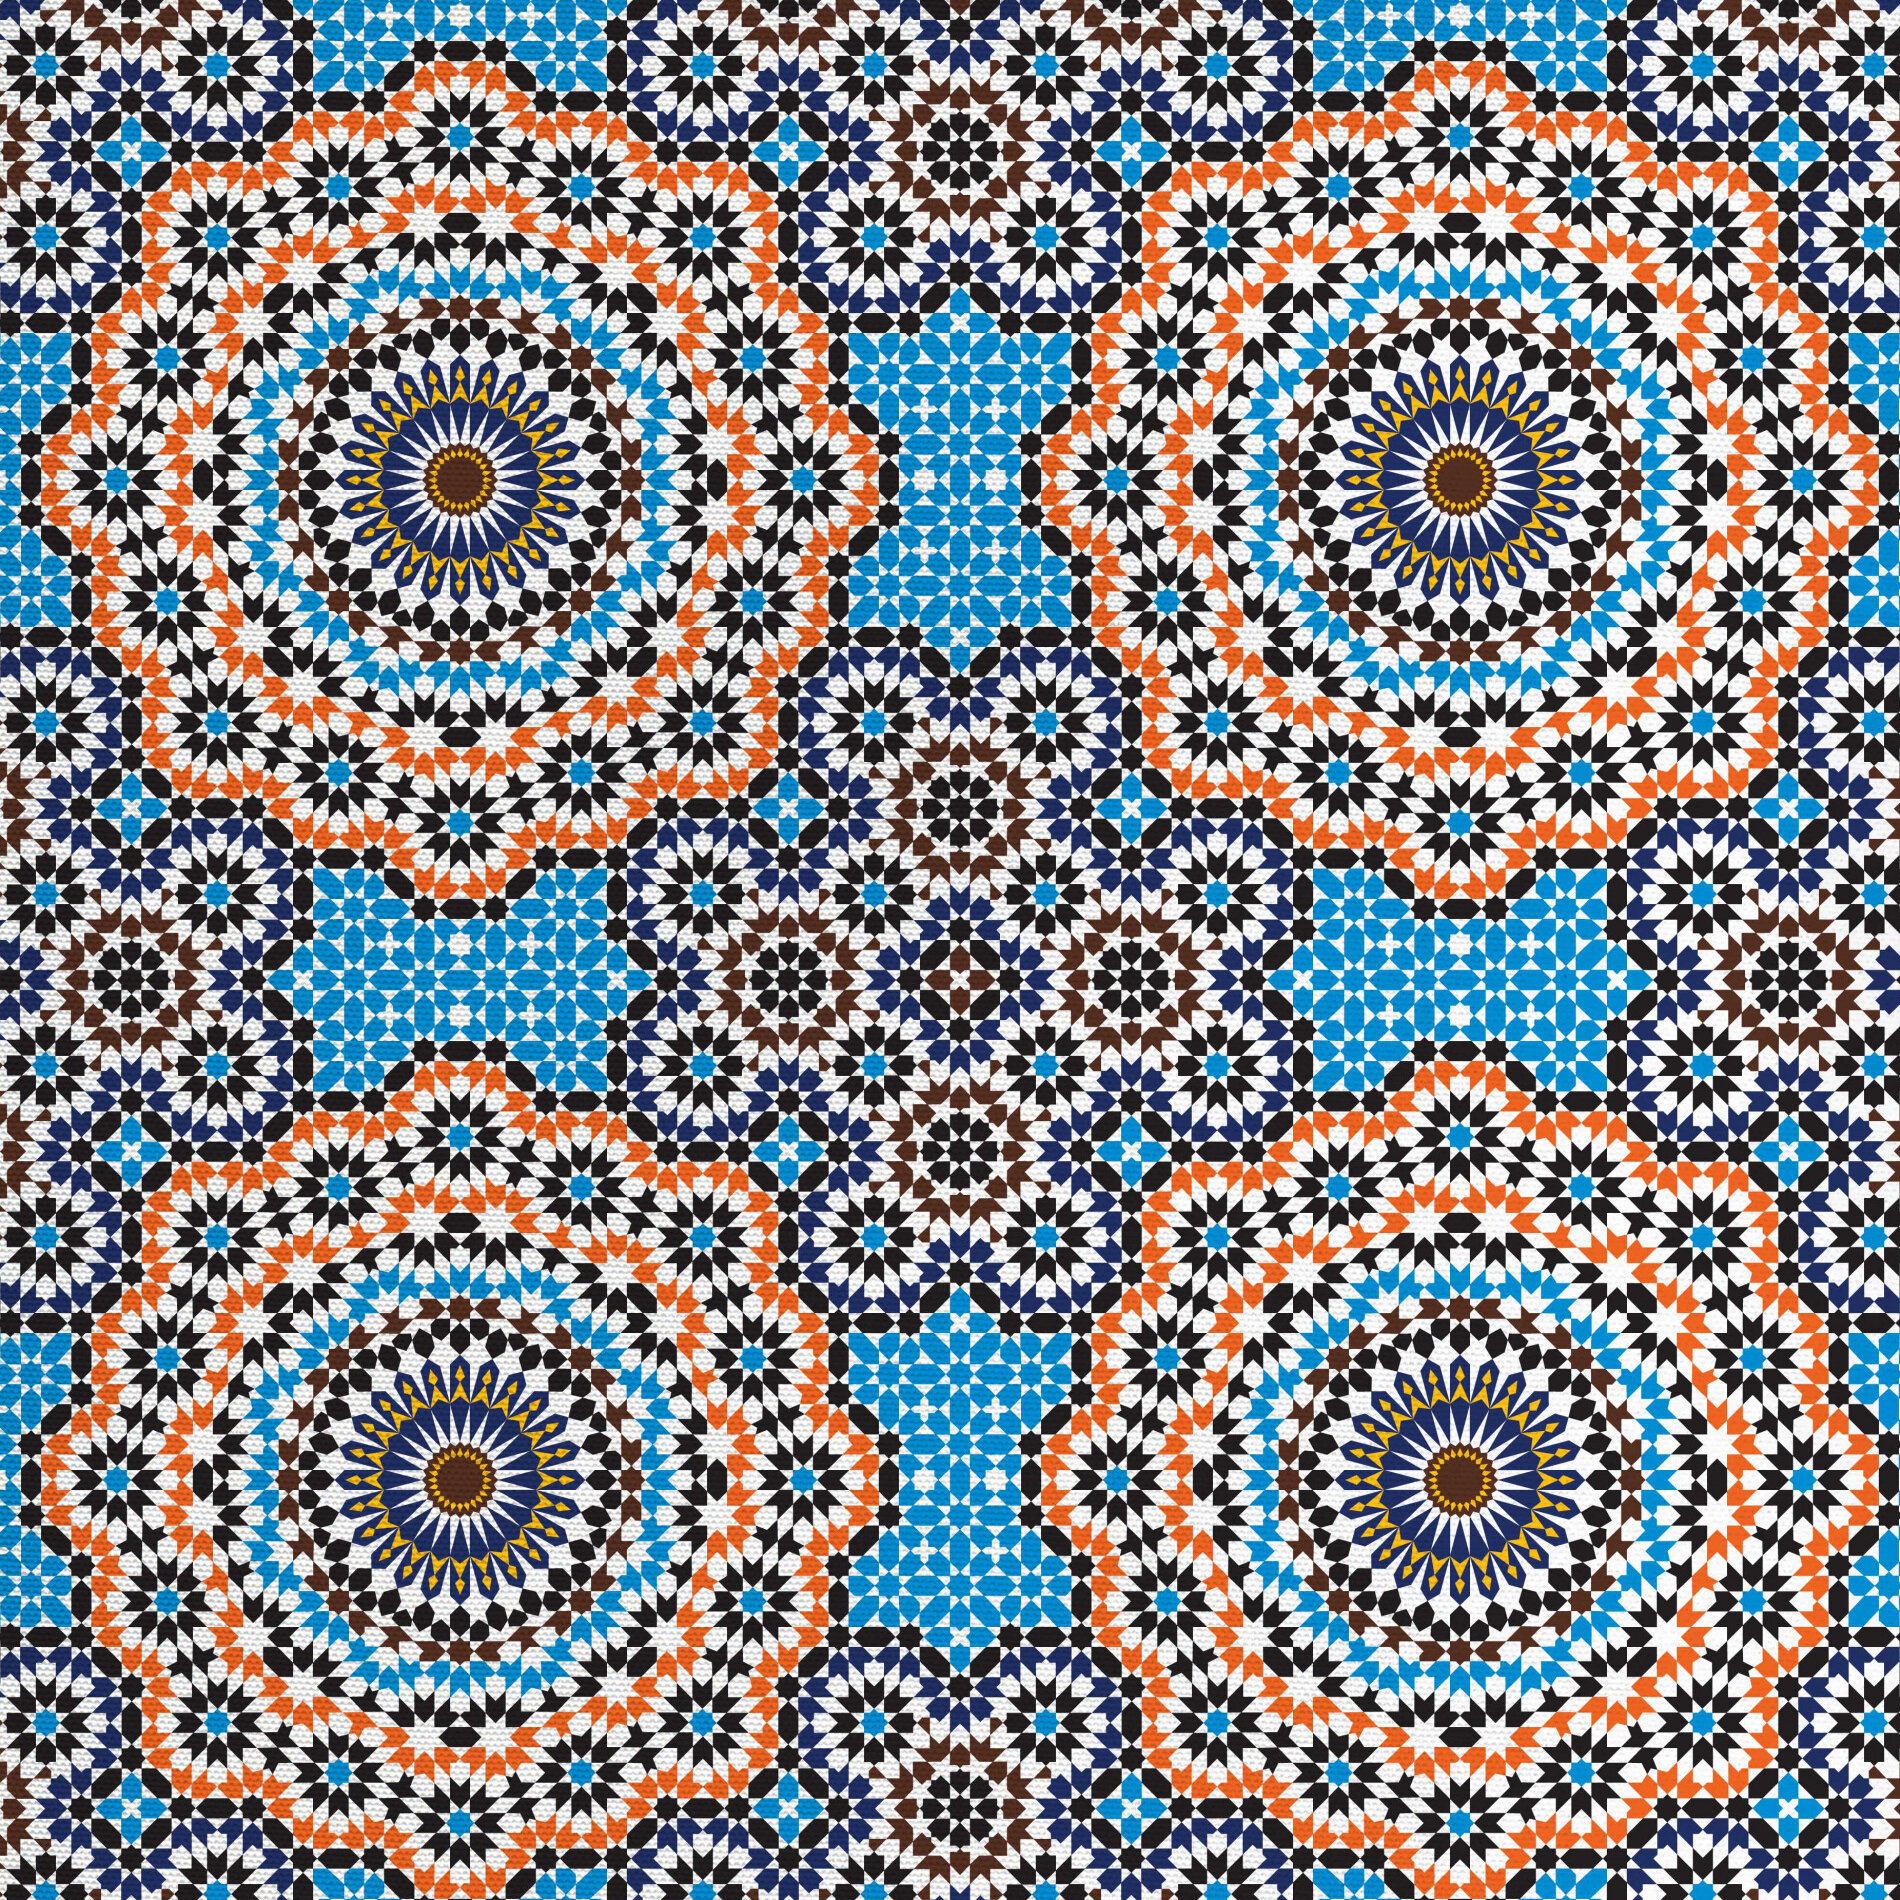 MC-502A Soimoi Fabric Tiles Moroccan Printed Fabric 1 Yard 